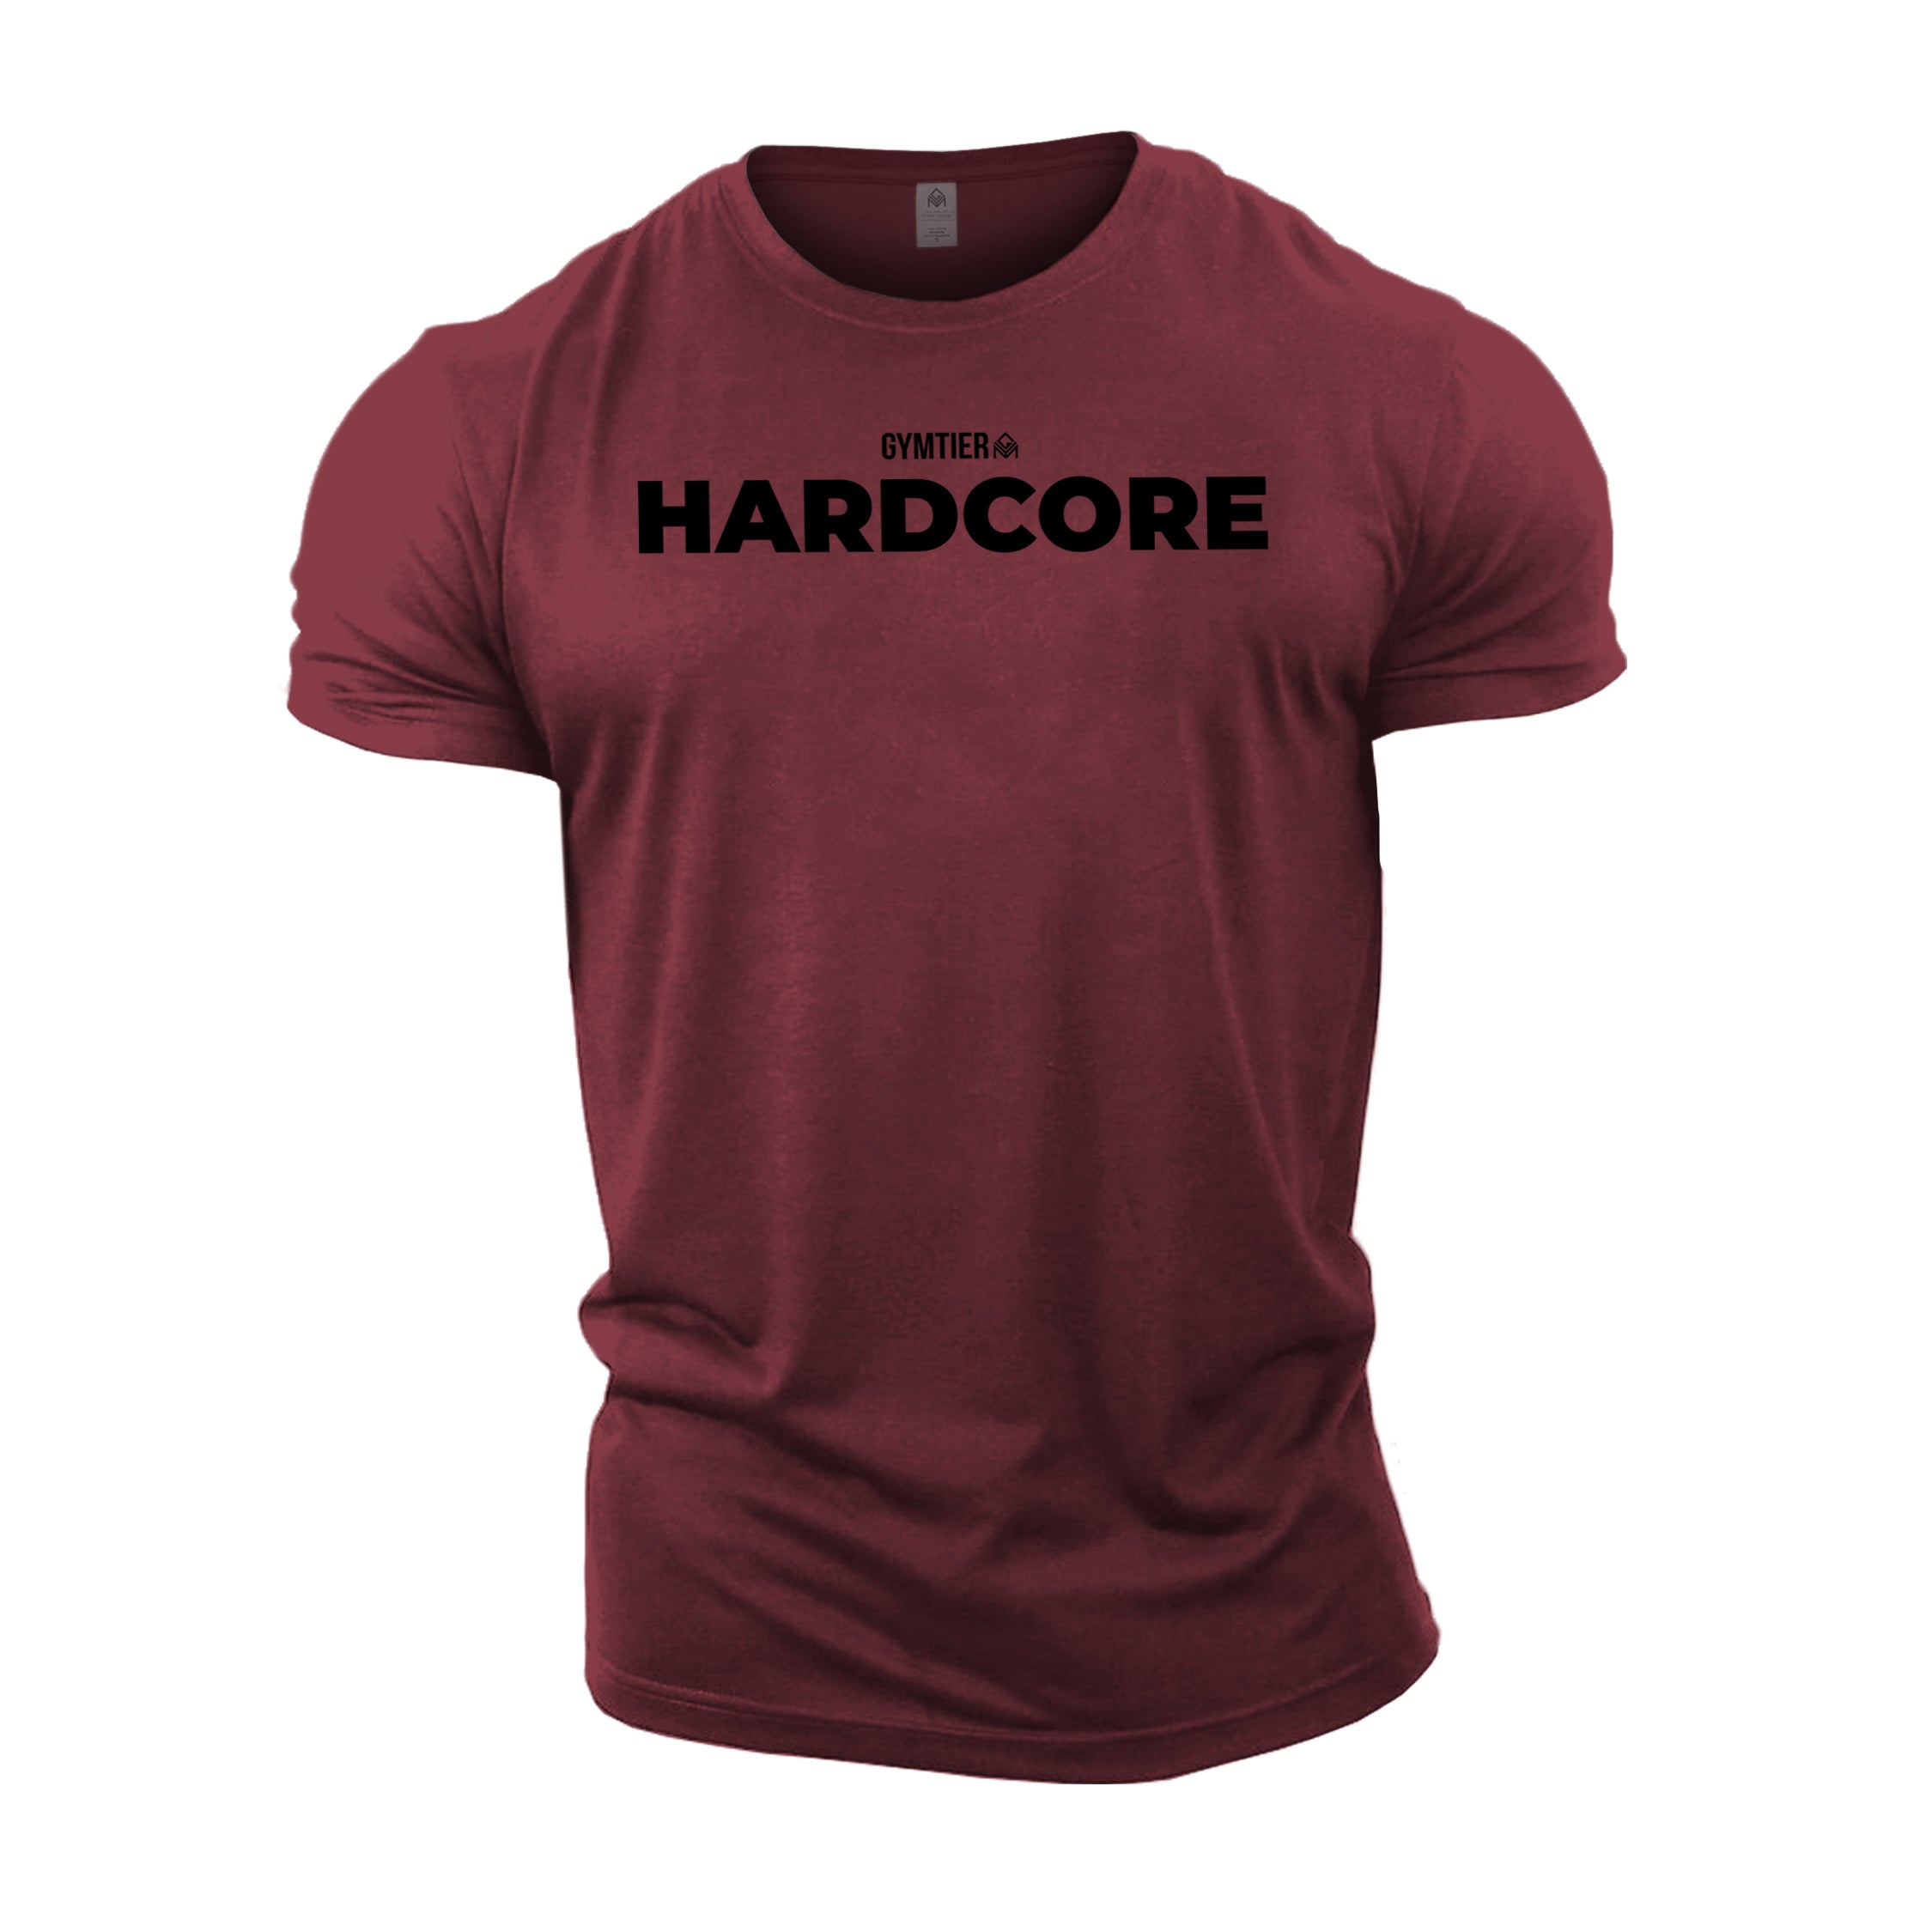 GYMTIER Hardcore T-Shirt